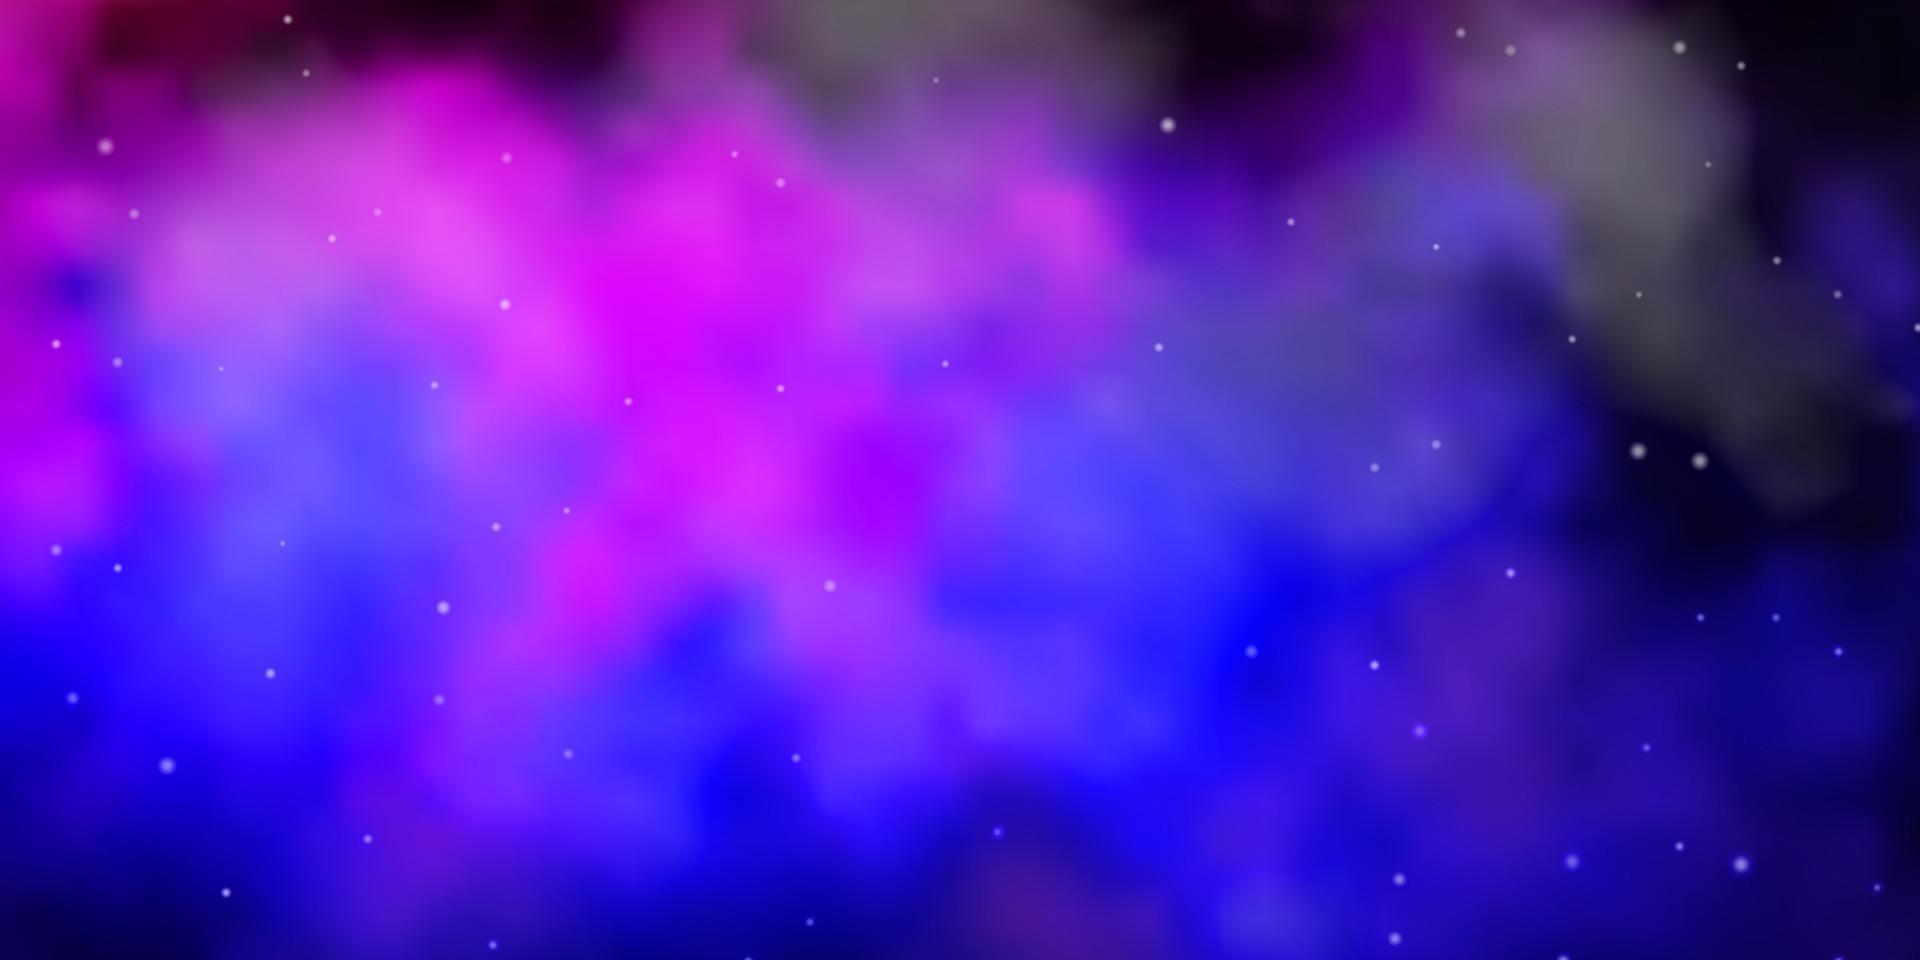 Dark Purple, Pink vector template with neon stars.